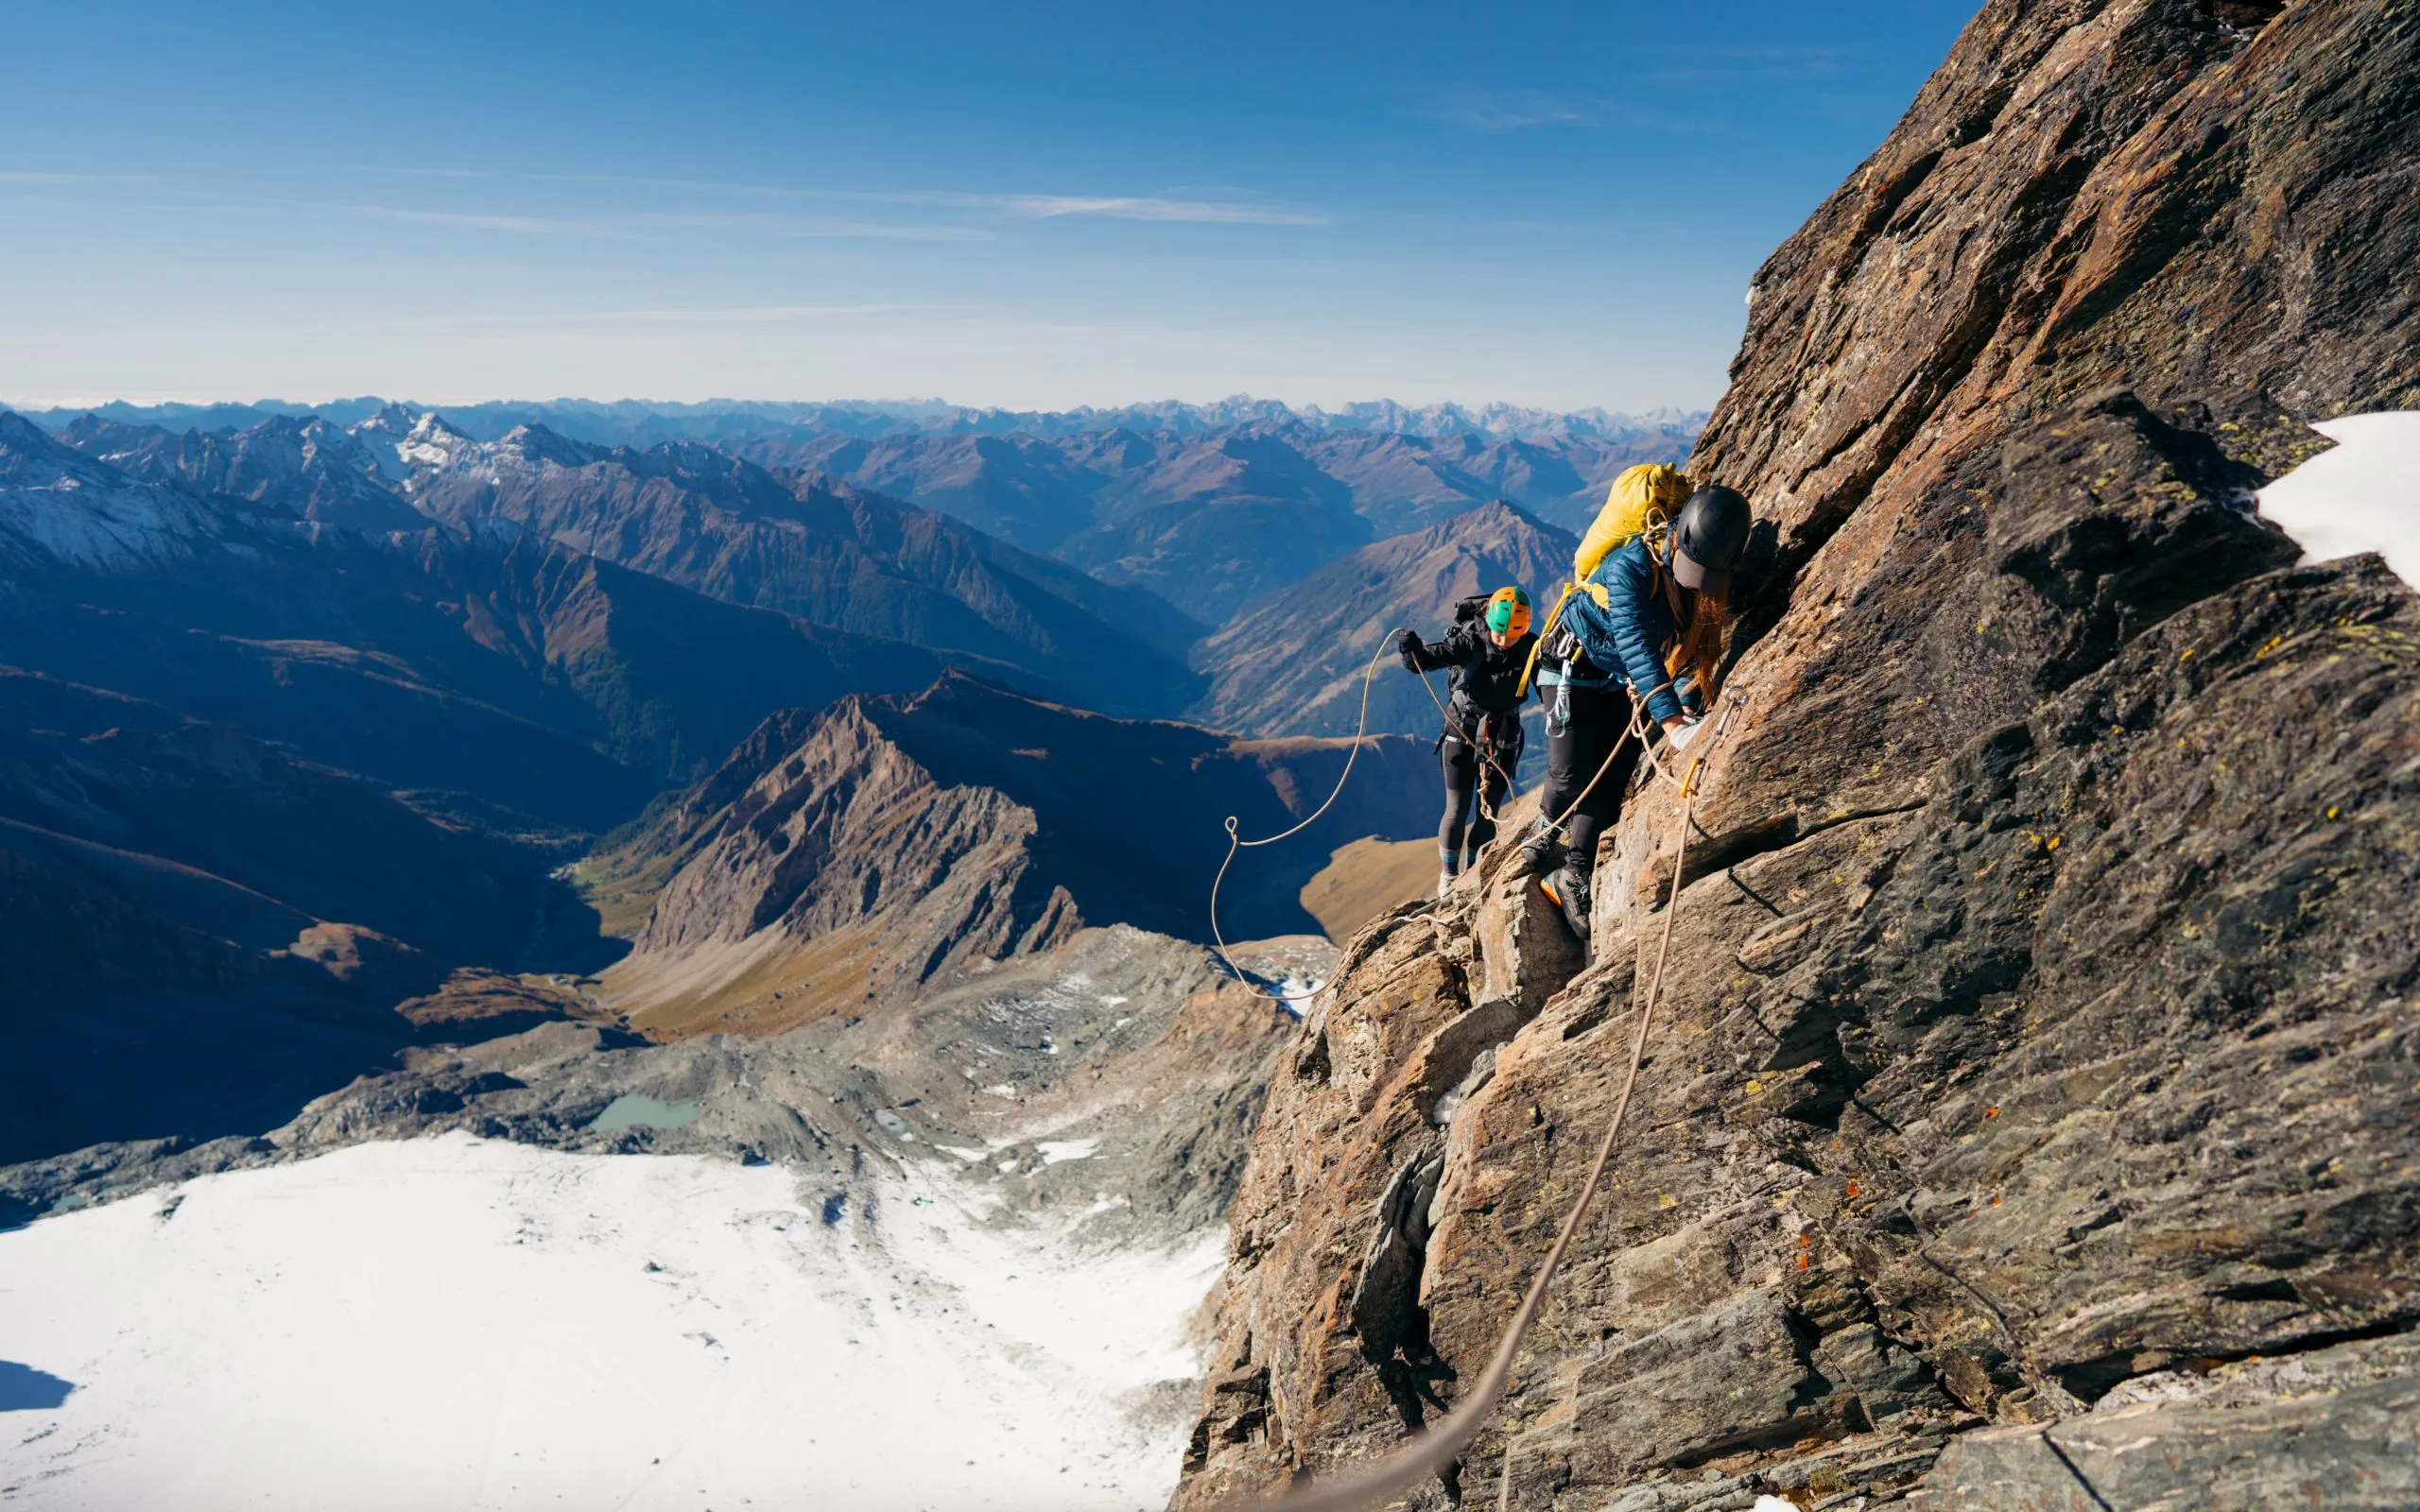 Rock climber on Studlgrat ridge on Grossglockner, highest mountain in Austria. Concept of alpine rock climbing.